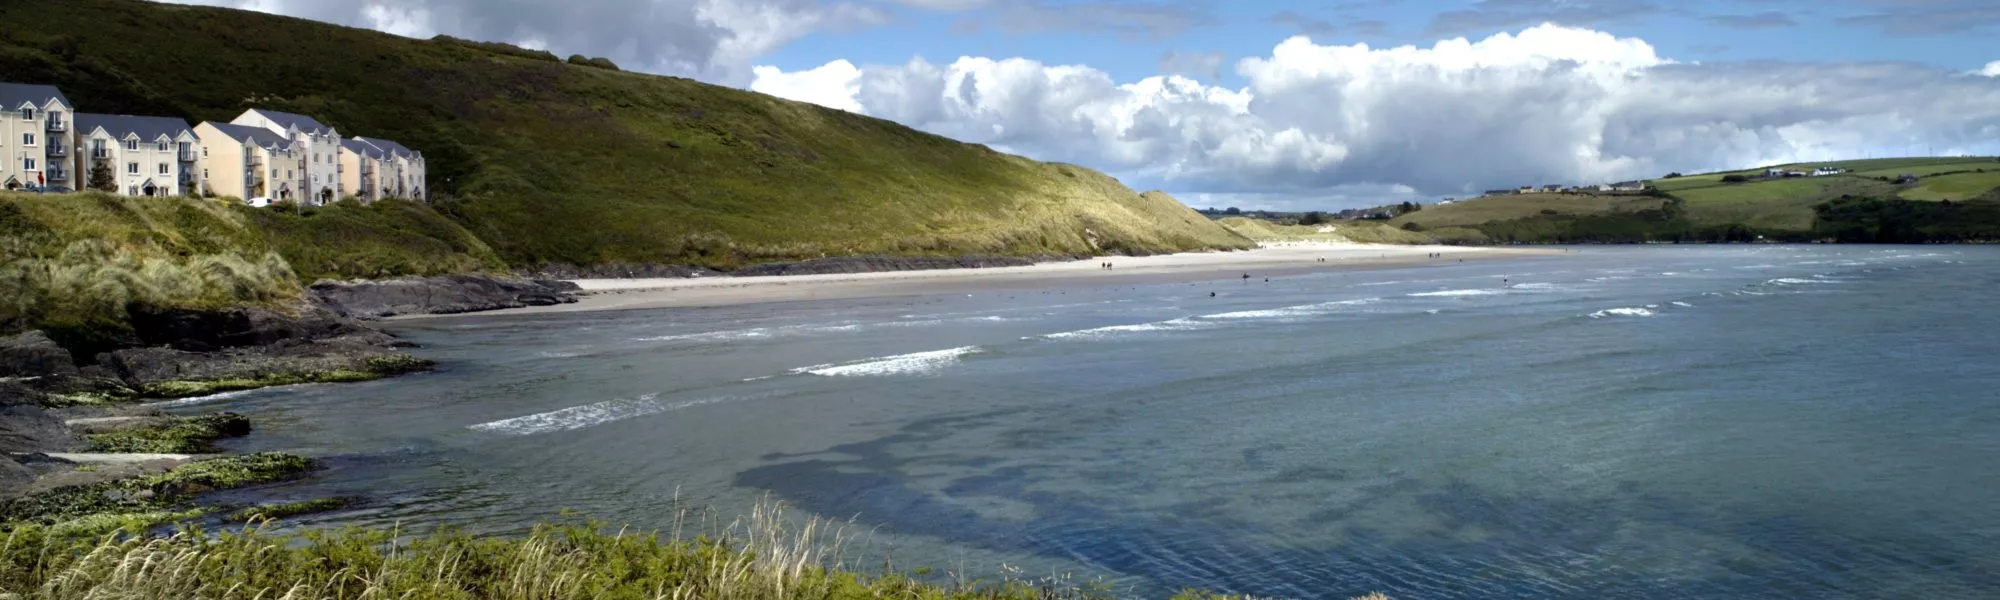 Inchydoney Beach in Ireland, Europe | Surfing,Beaches - Rated 4